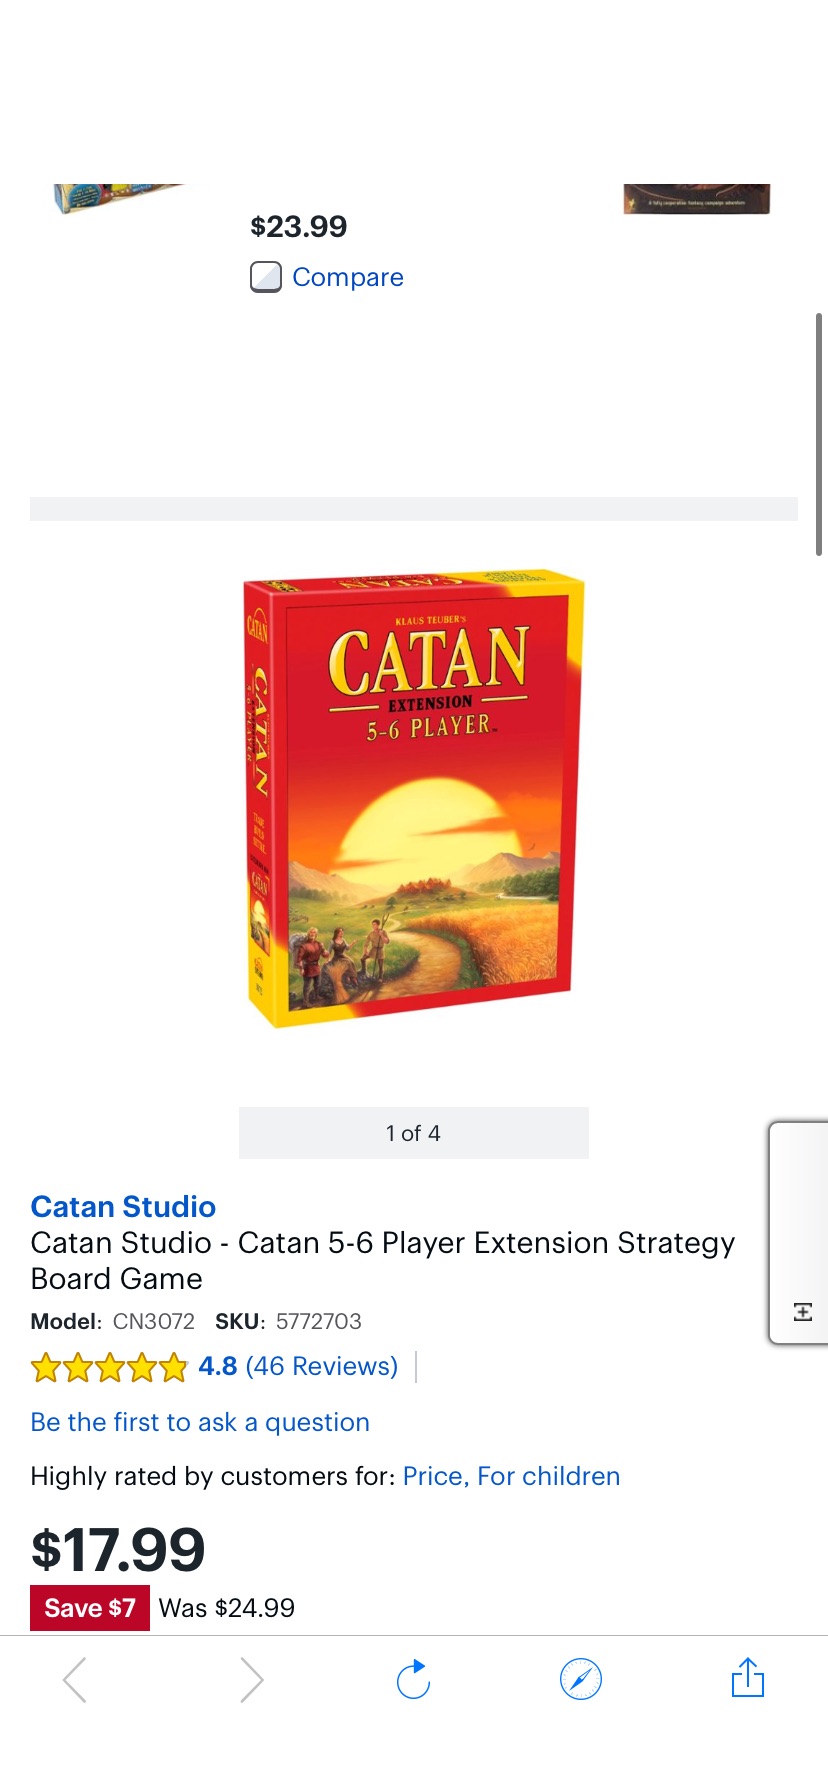 Catan Studio Catan 5-6 Player Extension Strategy Board Game CN3072 - Best Buy 卡坦岛桌游附加地图